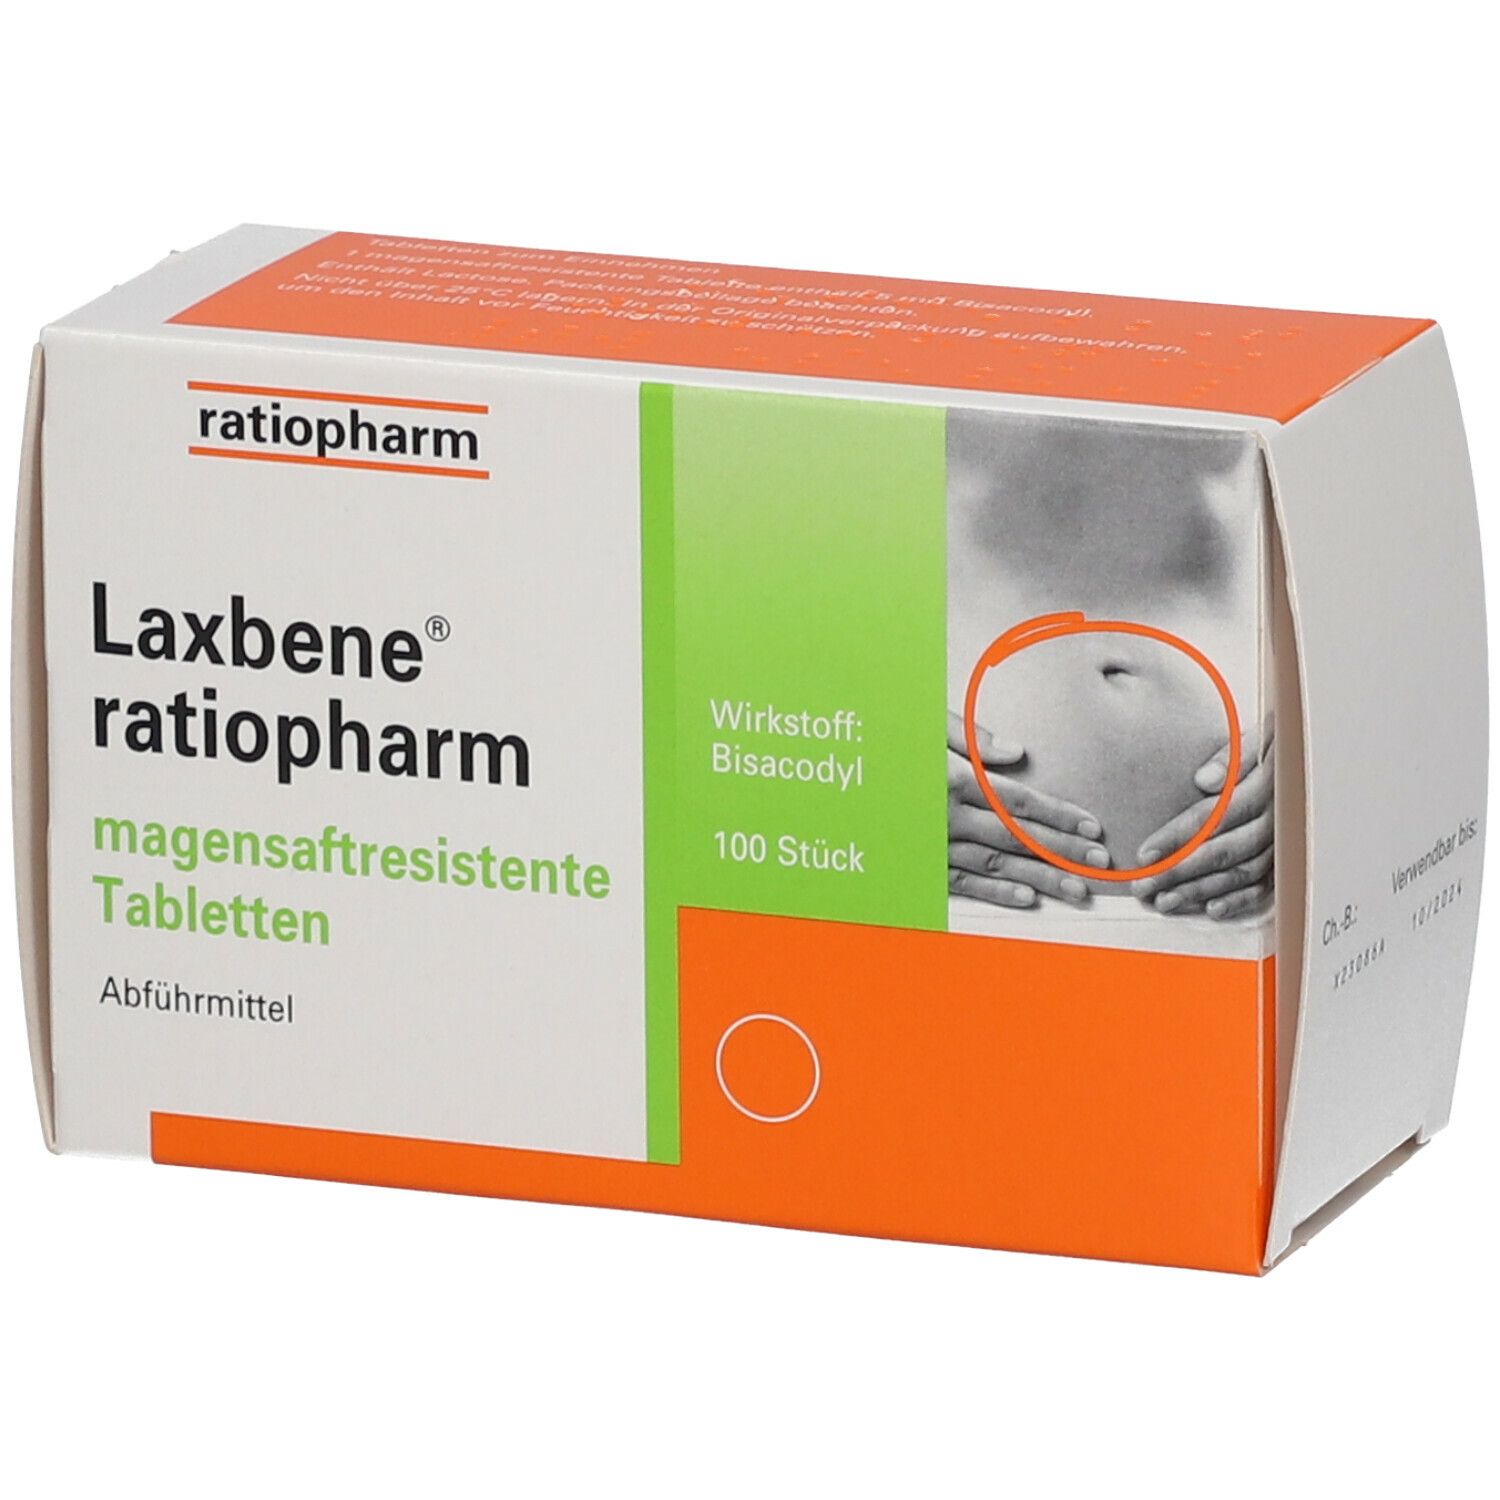 Laxbene® ratiopharm